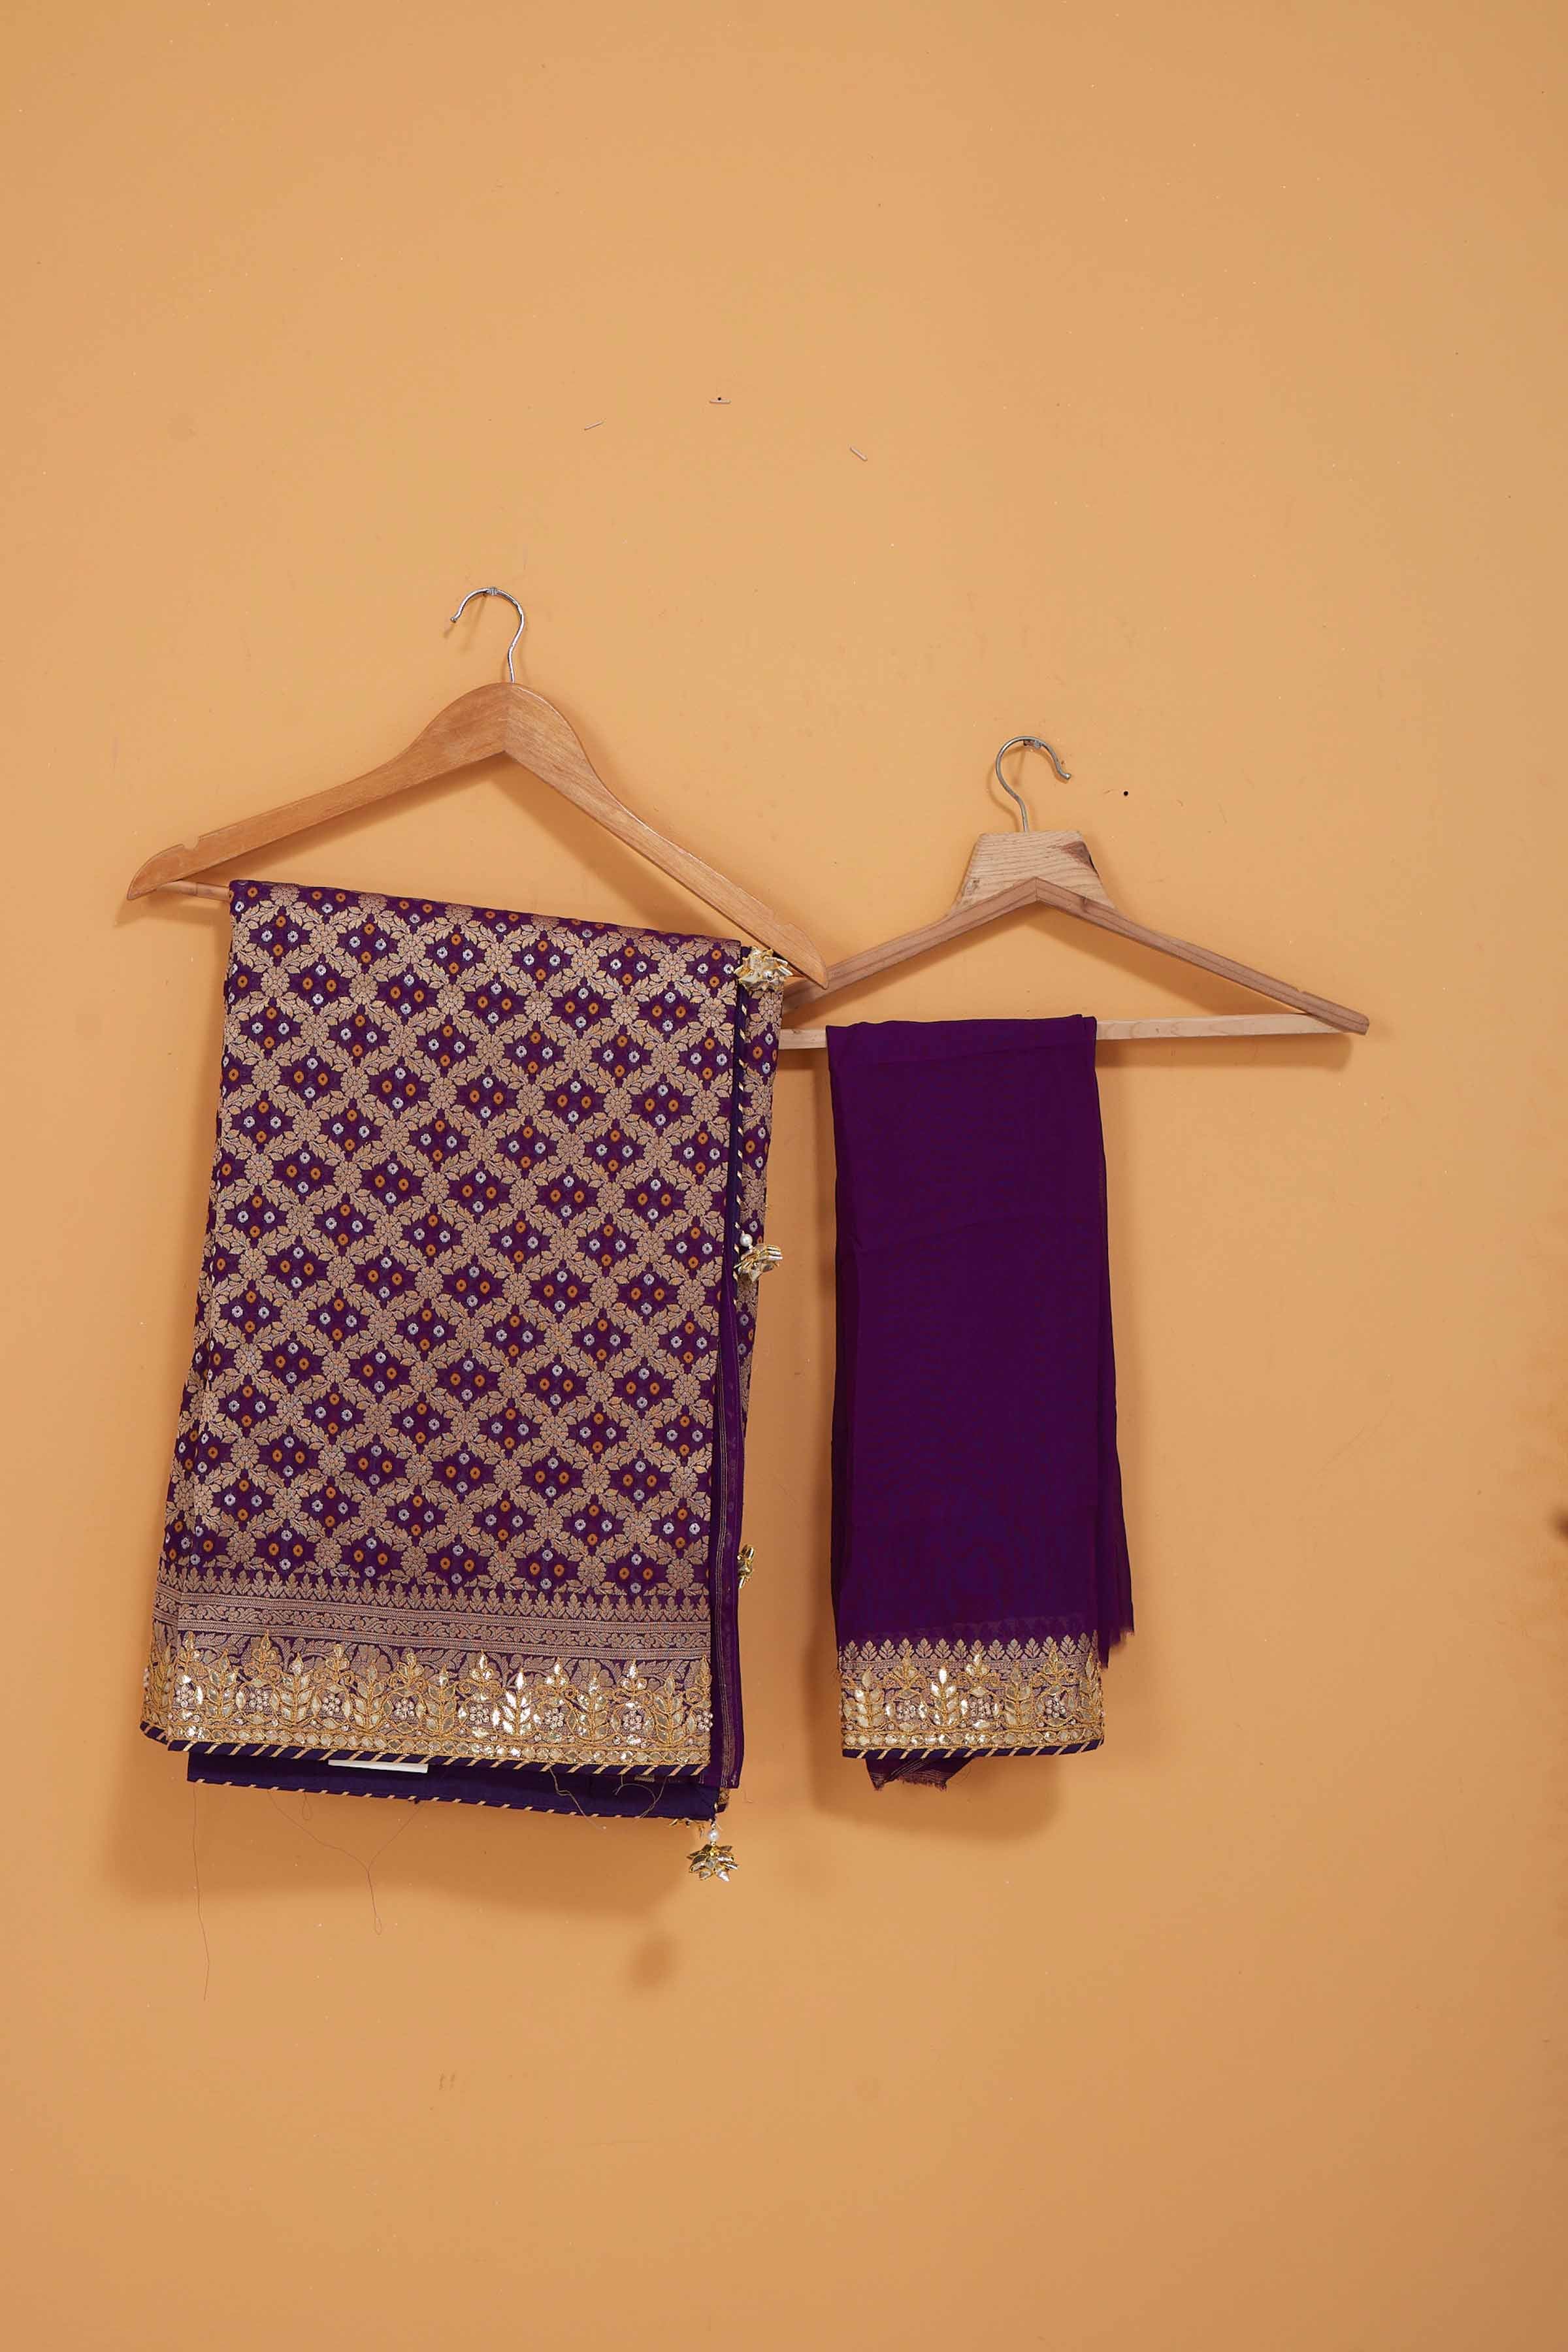 Buy purple bandhej Banarasi saree online in USA with embroidered border. Look royal at weddings and festive occasions in exquisite designer sarees, handwoven sarees, pure silk saris, Banarasi sarees, Kanchipuram silk sarees from Pure Elegance Indian saree store in USA. -blouse